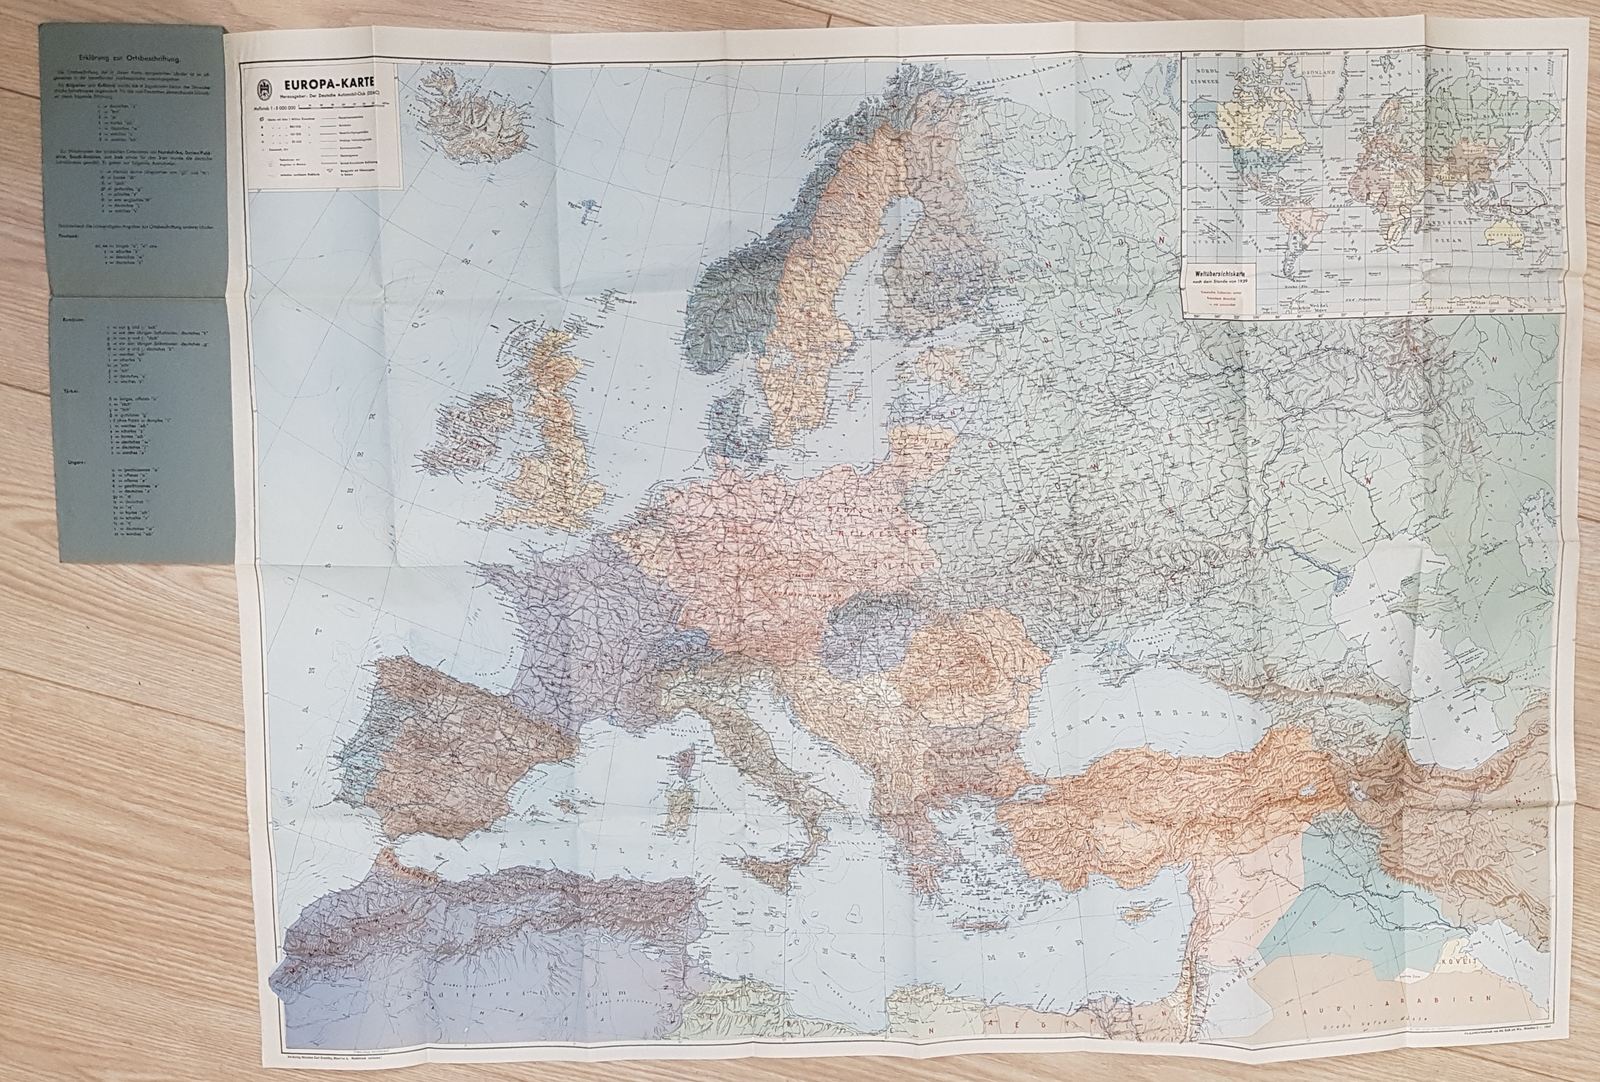 Deutschland Landkarte Europa Europakarte Ddac 1 5000 000 1940 Landkarte Europa Ddac 1 5000 000 Europakarte Kaum Gebrauchsspuren Ma Shops